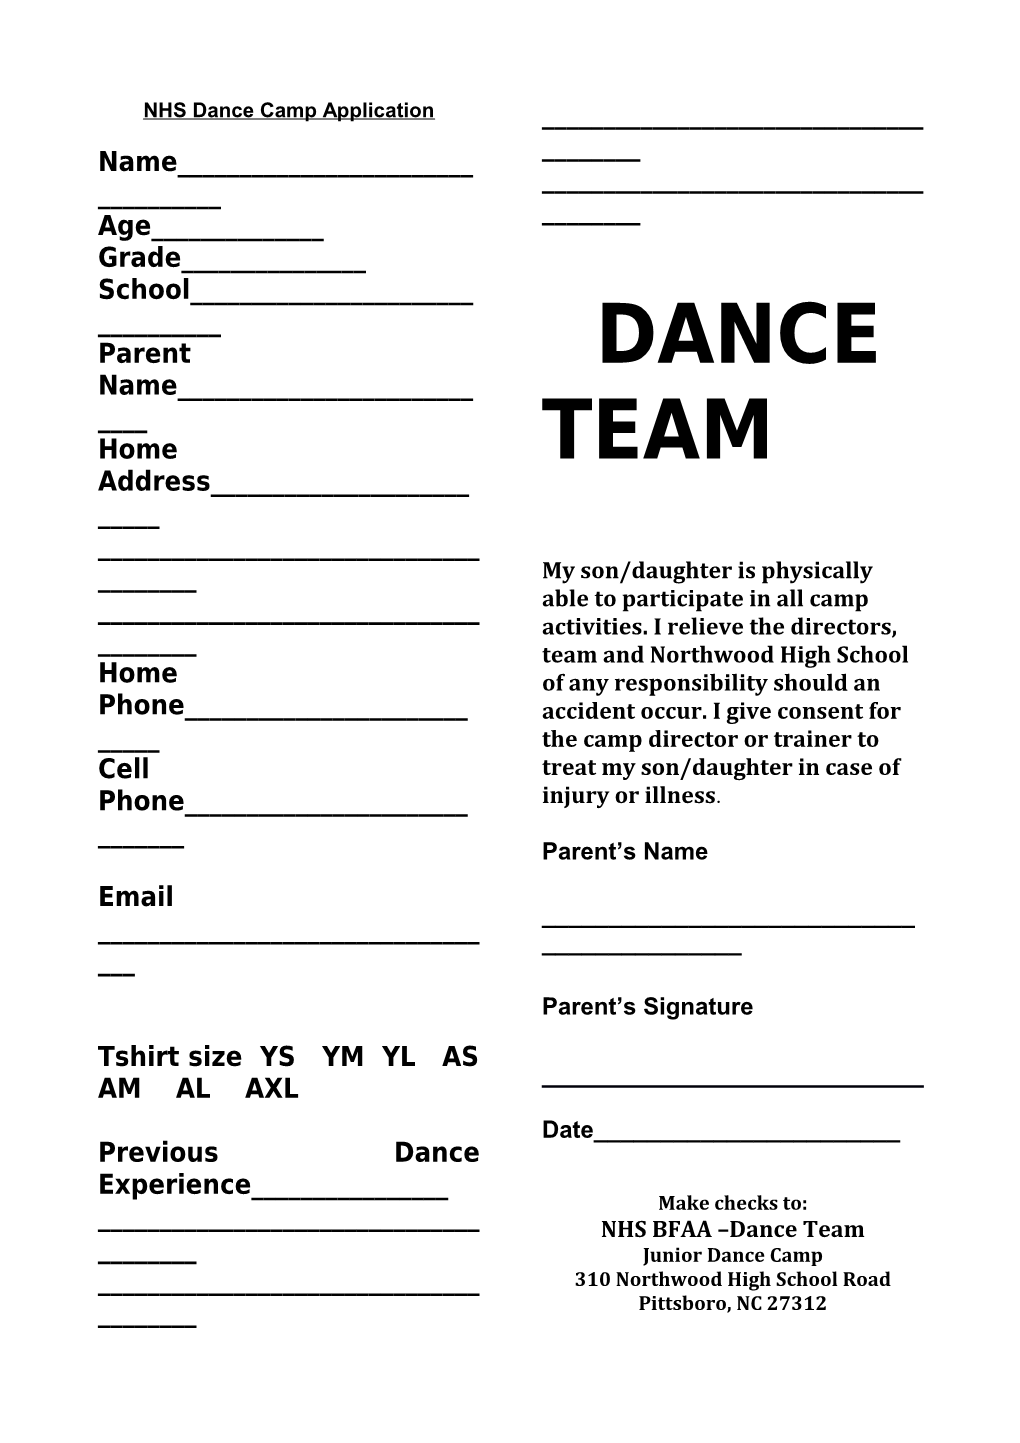 NHS Dance Camp Application